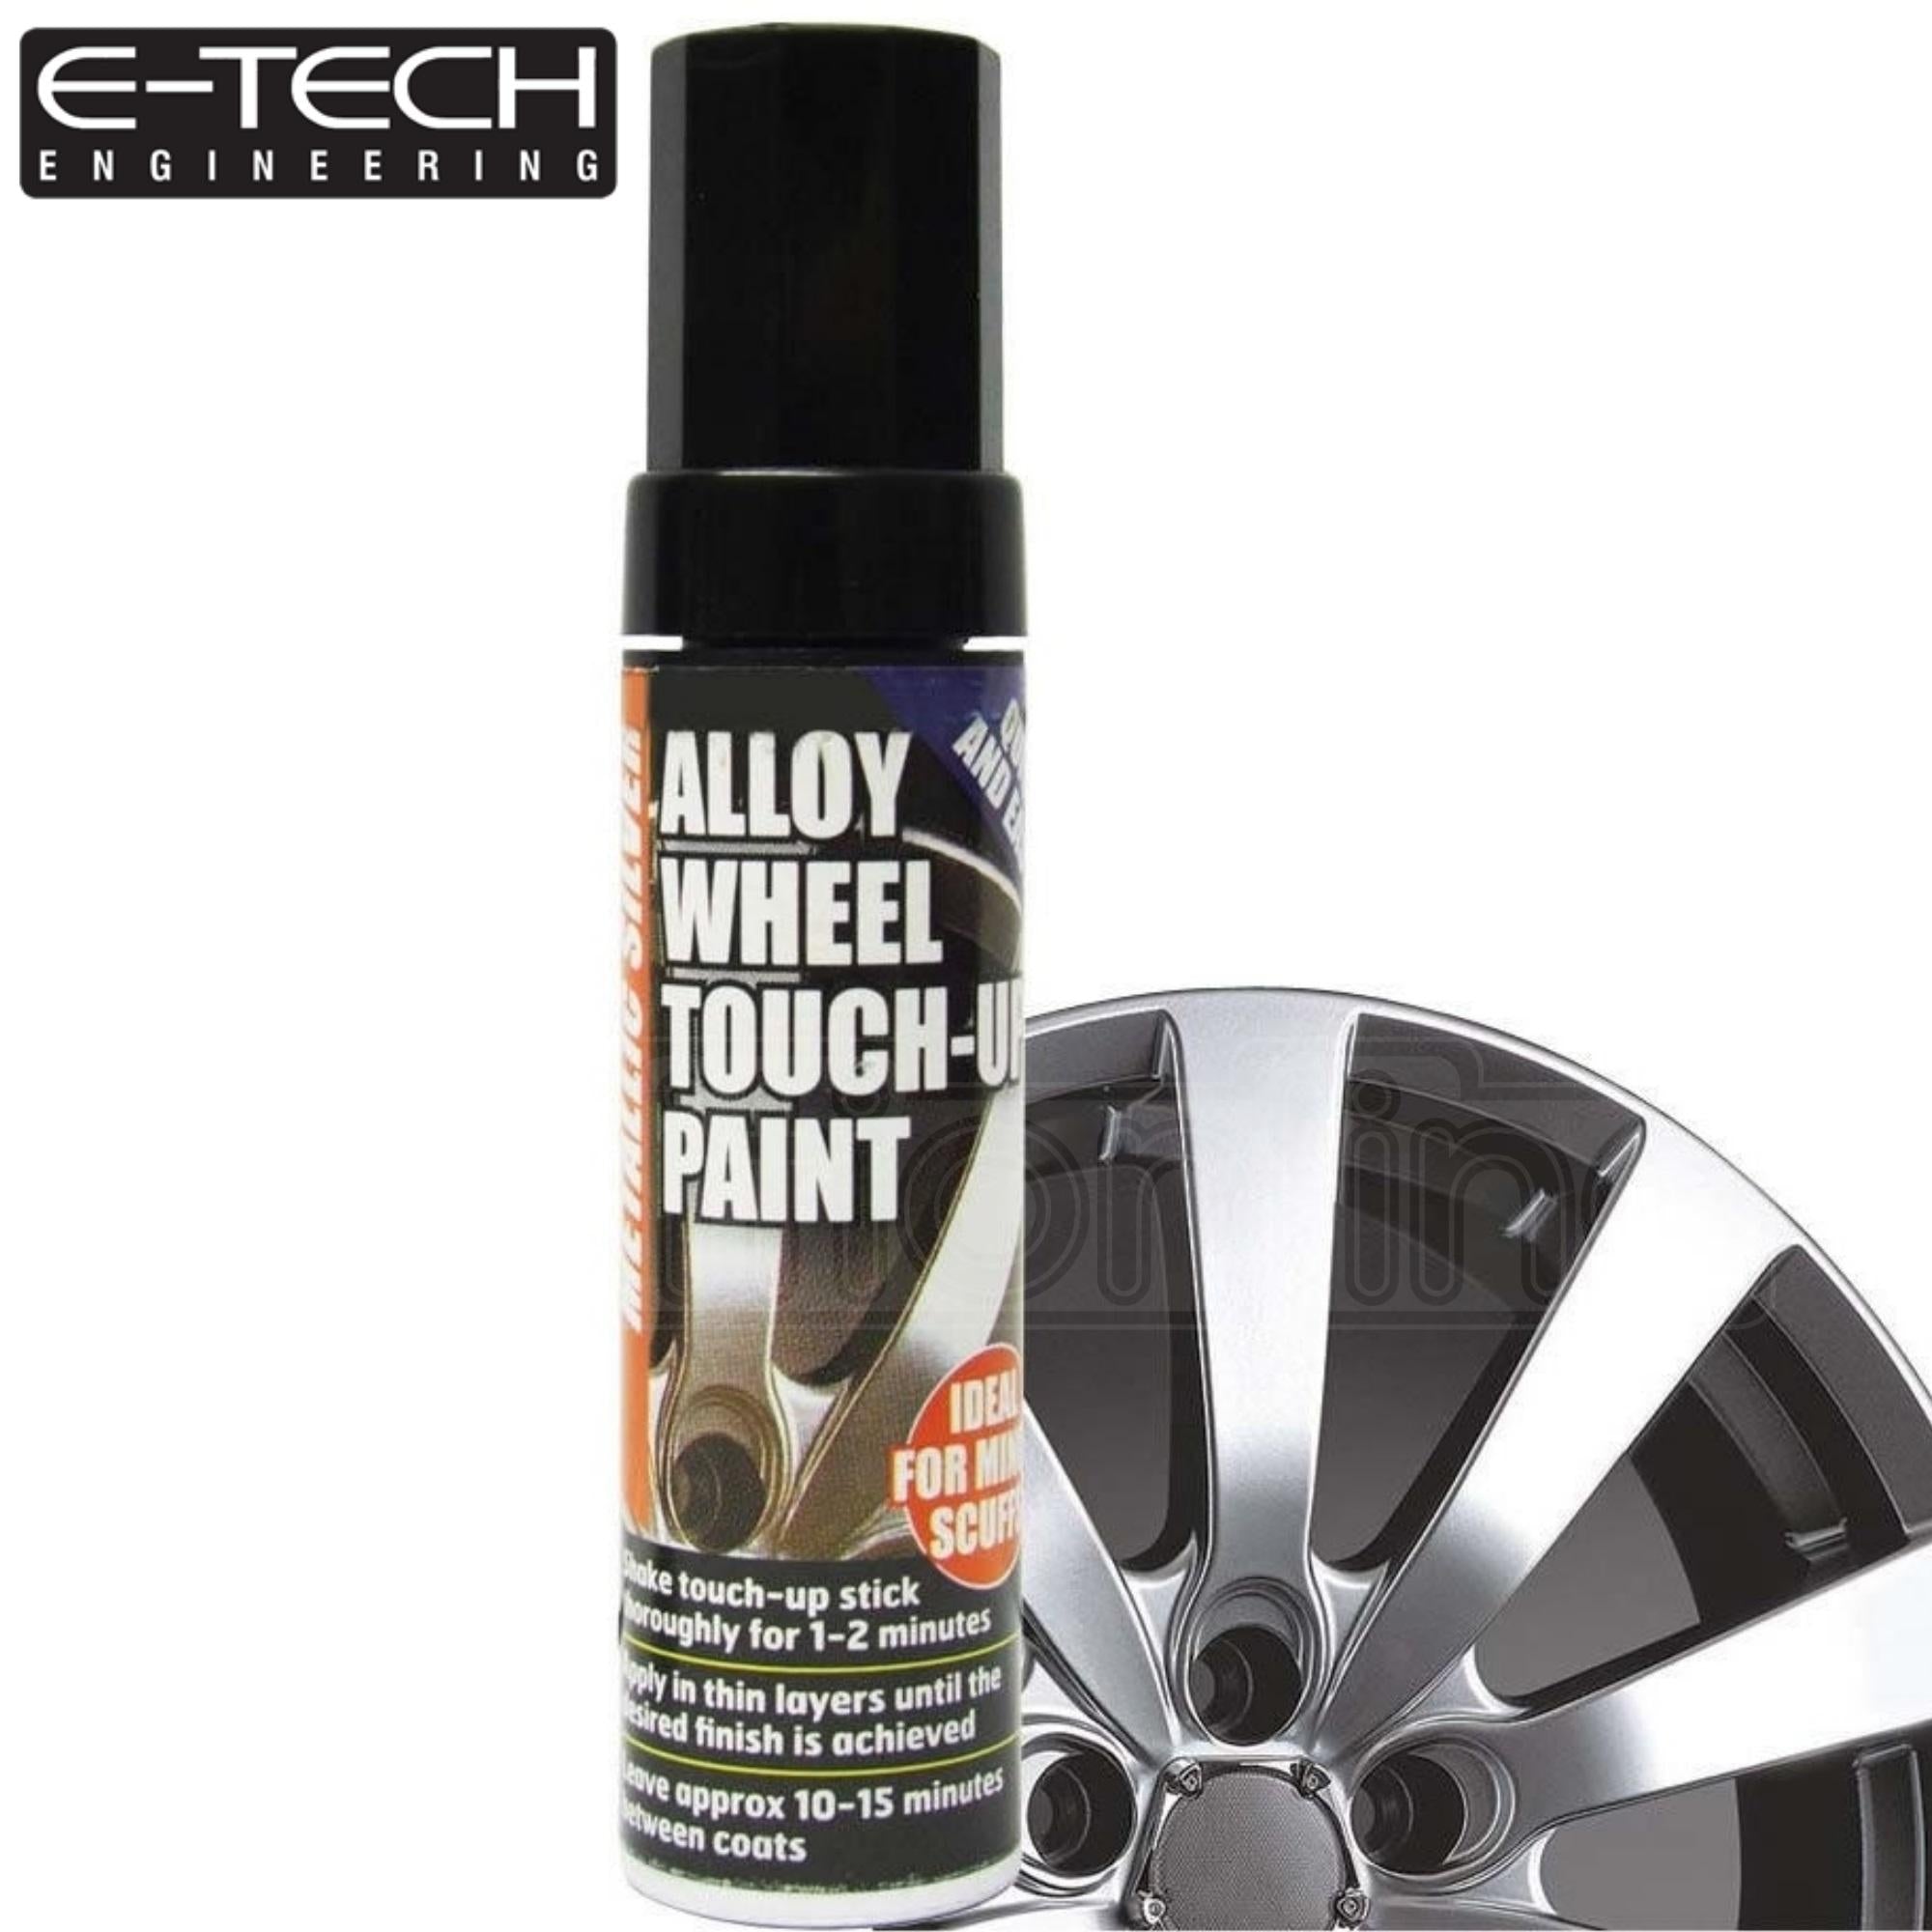 E-TECH Metallic Silver Alloy Wheel Paint Touch-up Stick 12ml